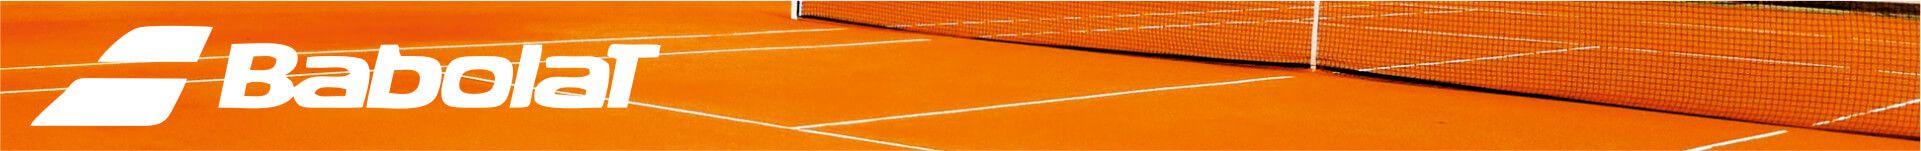 Racchette Babolat - Tennis Corner